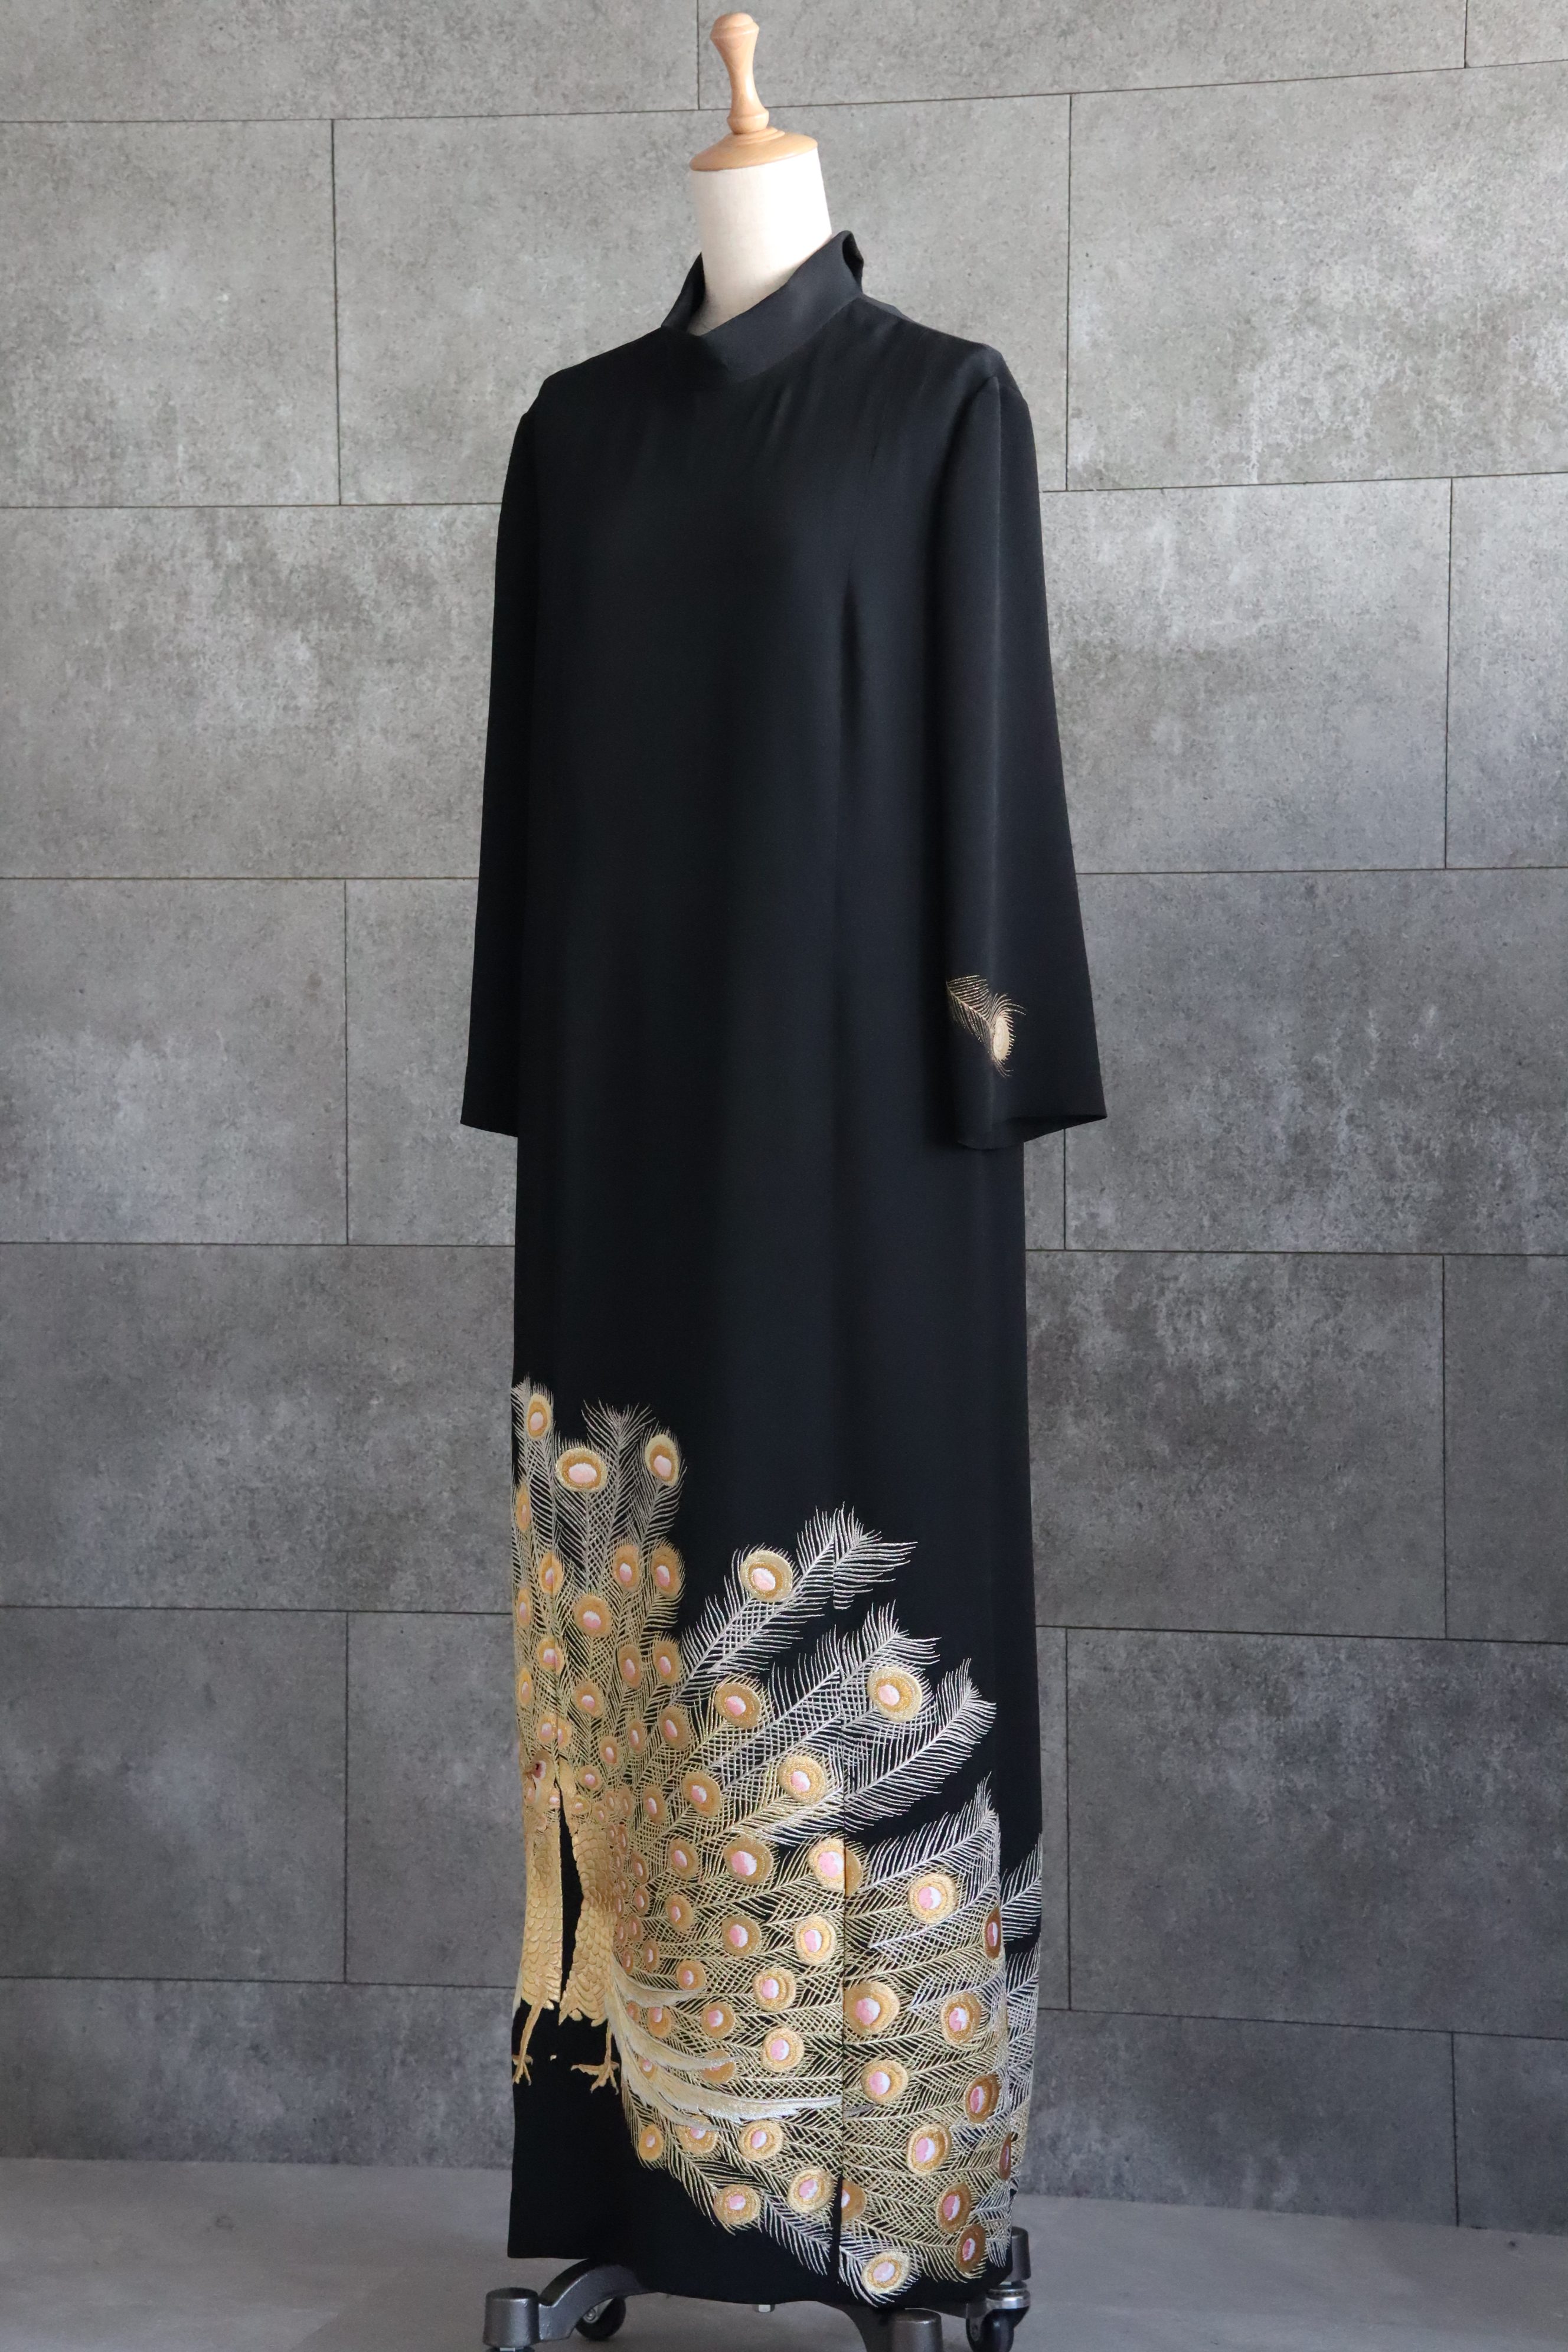 S様（栃木県）黒留袖着物からドレス